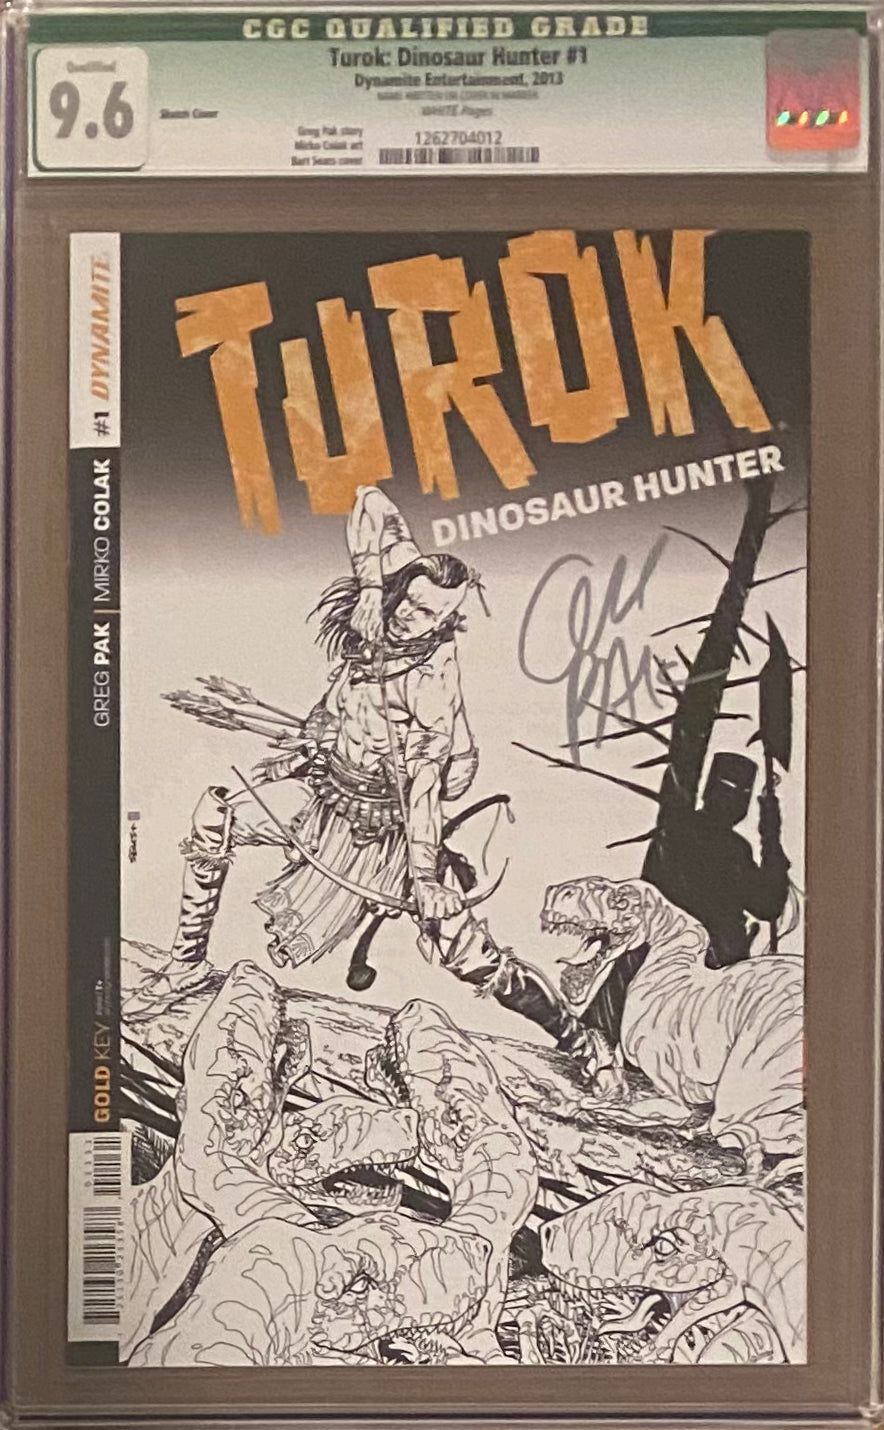 Turok: Dinosaur Hunter #1 Sketch Cover CGC 9.6 Qualified